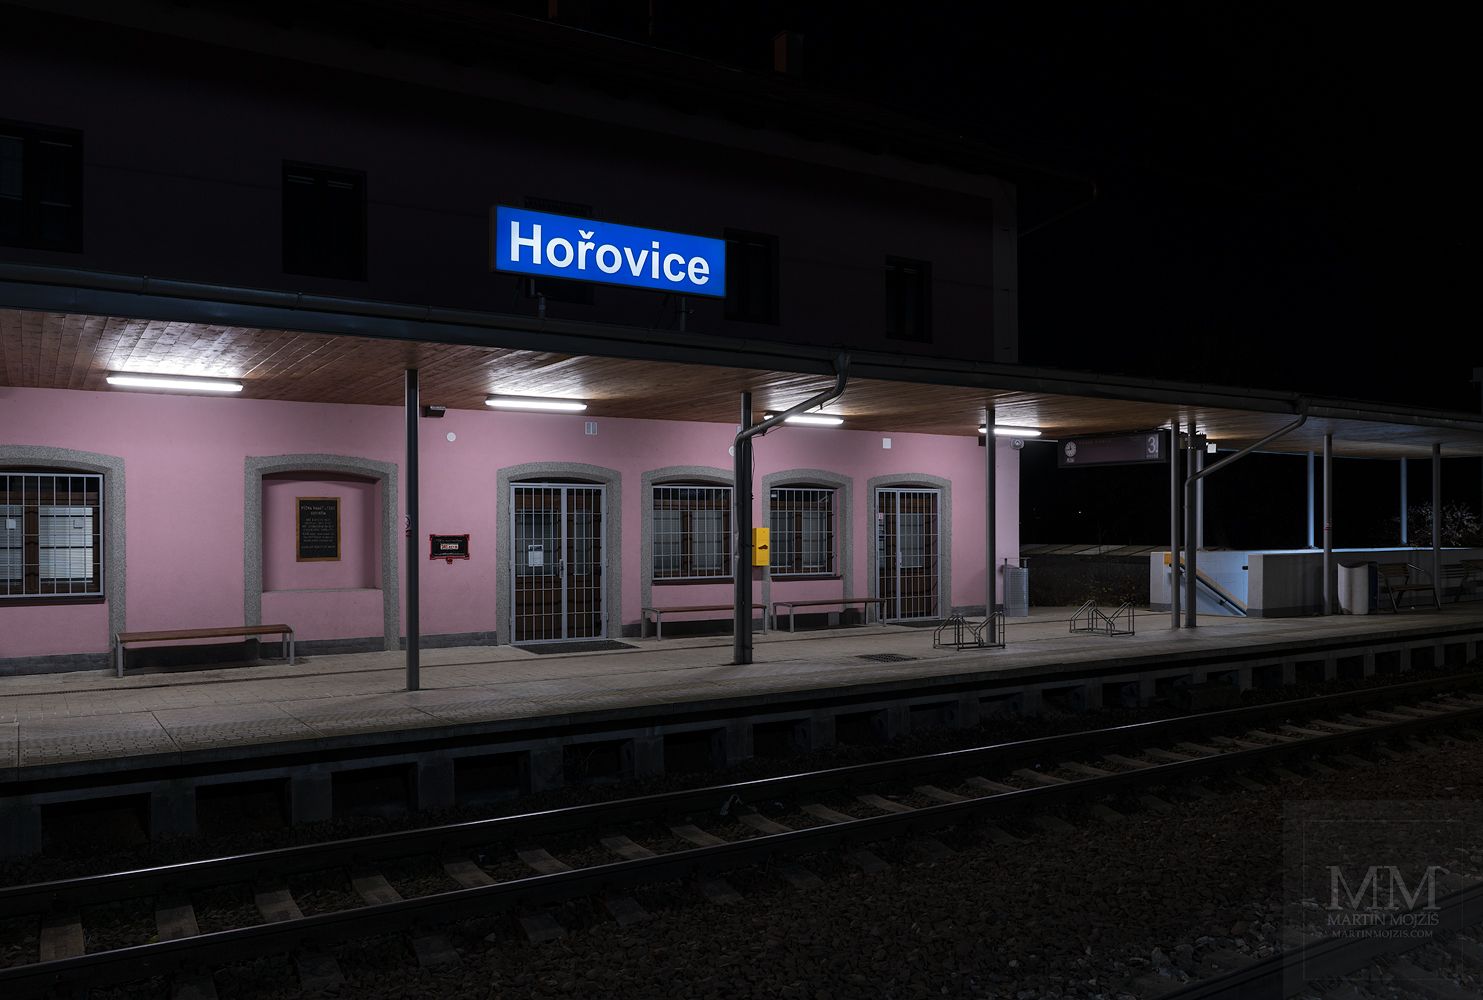 Railway station Horovice.